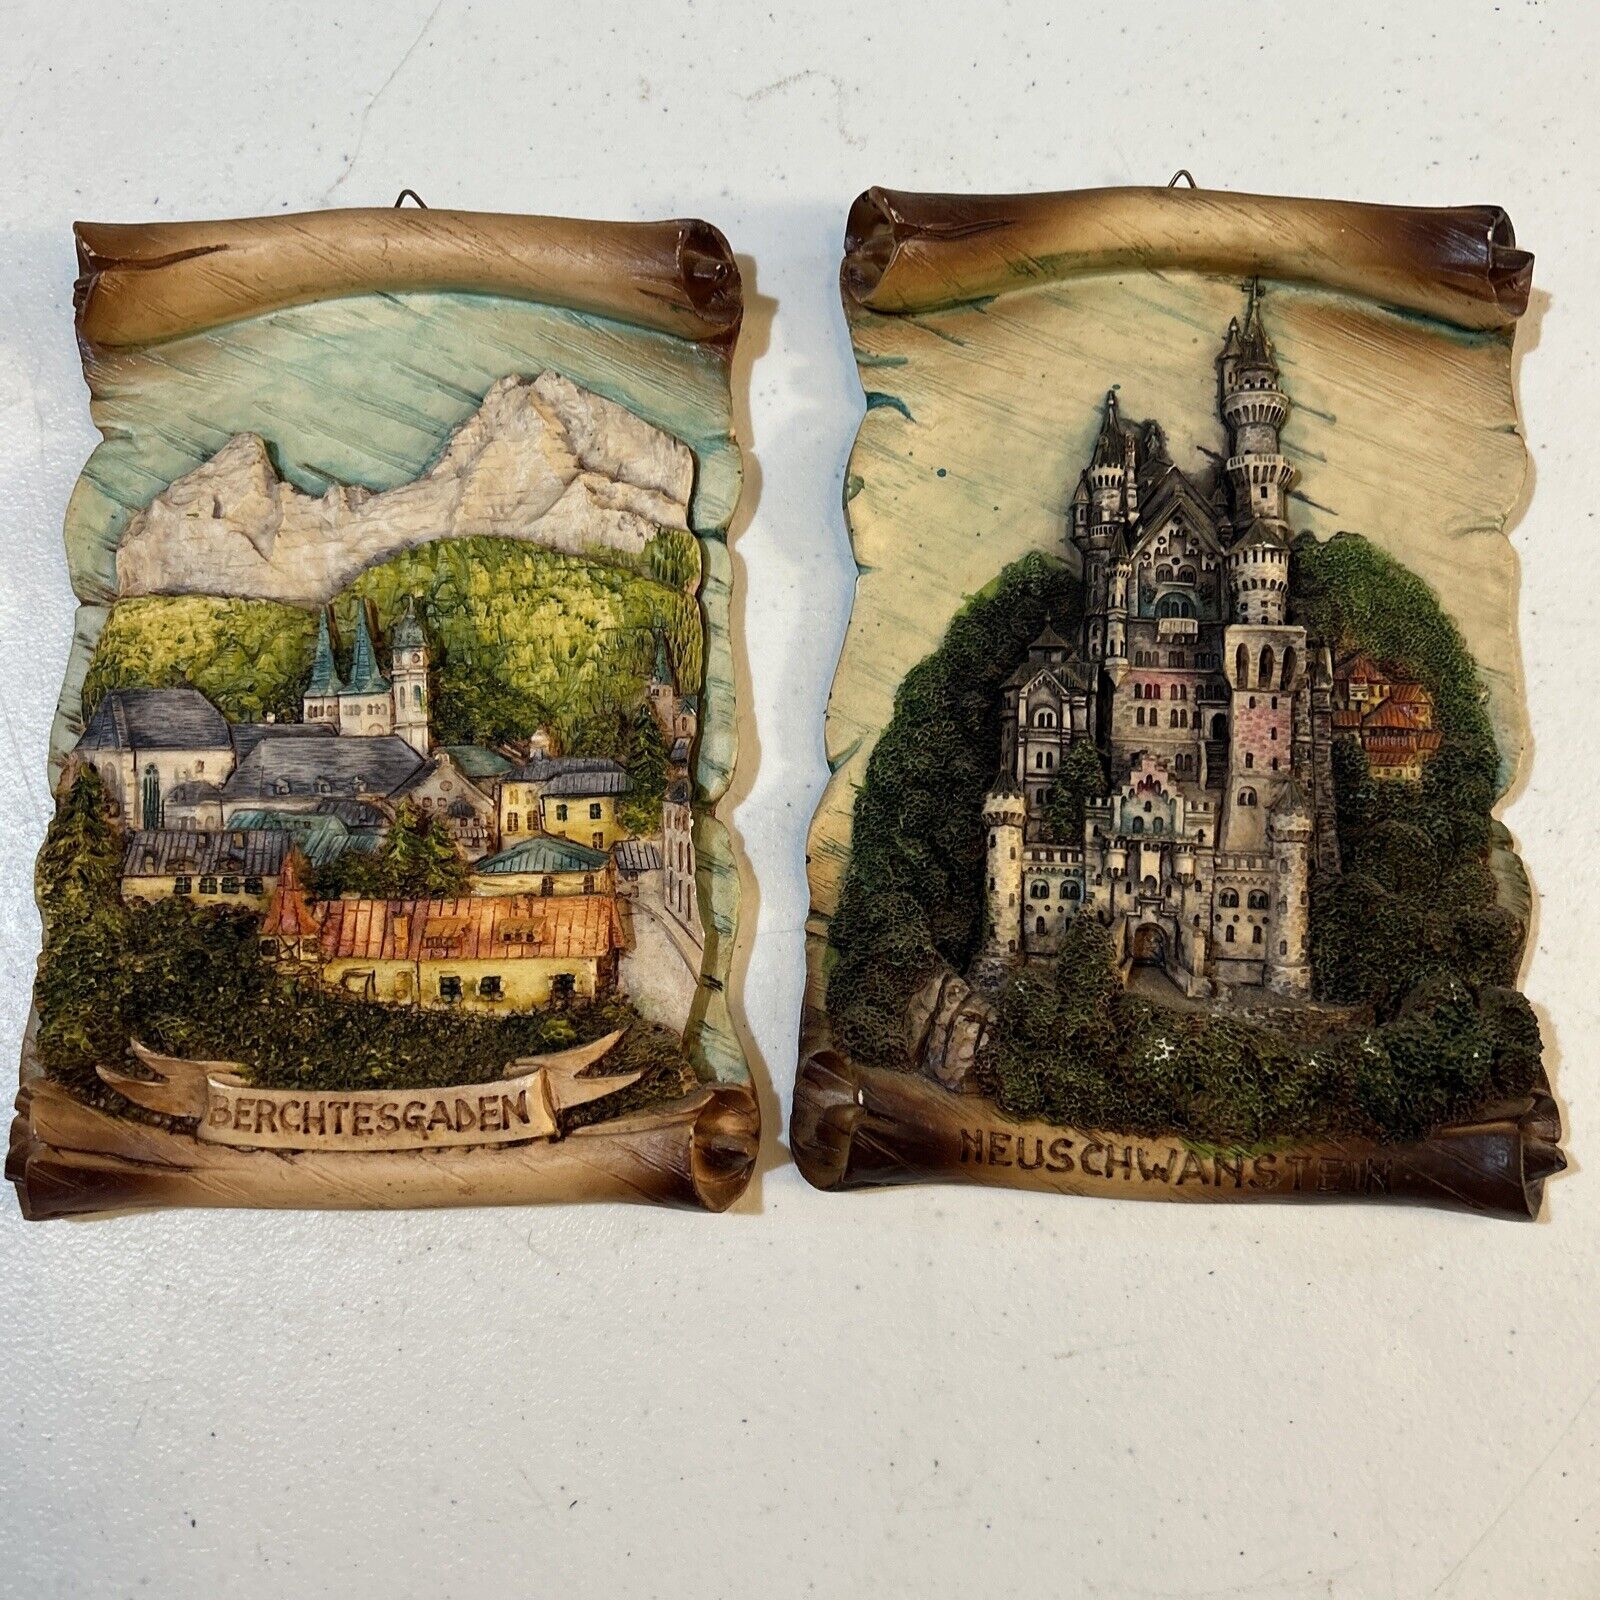 Vintage Neuschwanstein Castle And Berchtesgaden City scape Handmade Wall Art